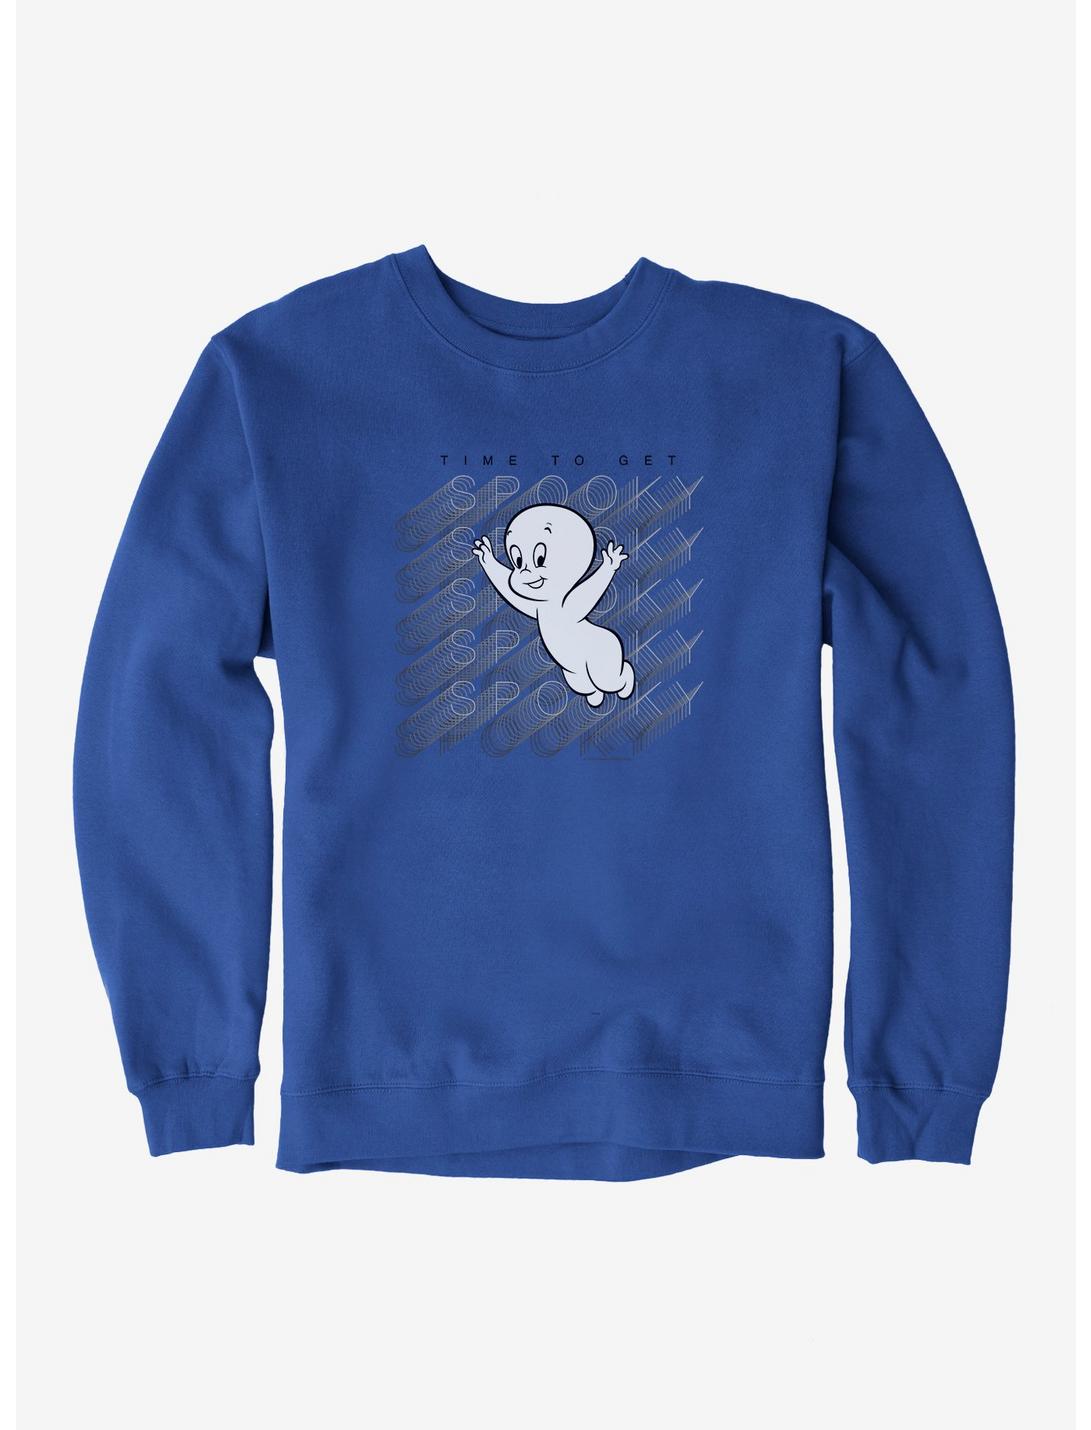 Casper The Friendly Ghost Virtual Raver Spooky Time Sweatshirt, ROYAL BLUE, hi-res